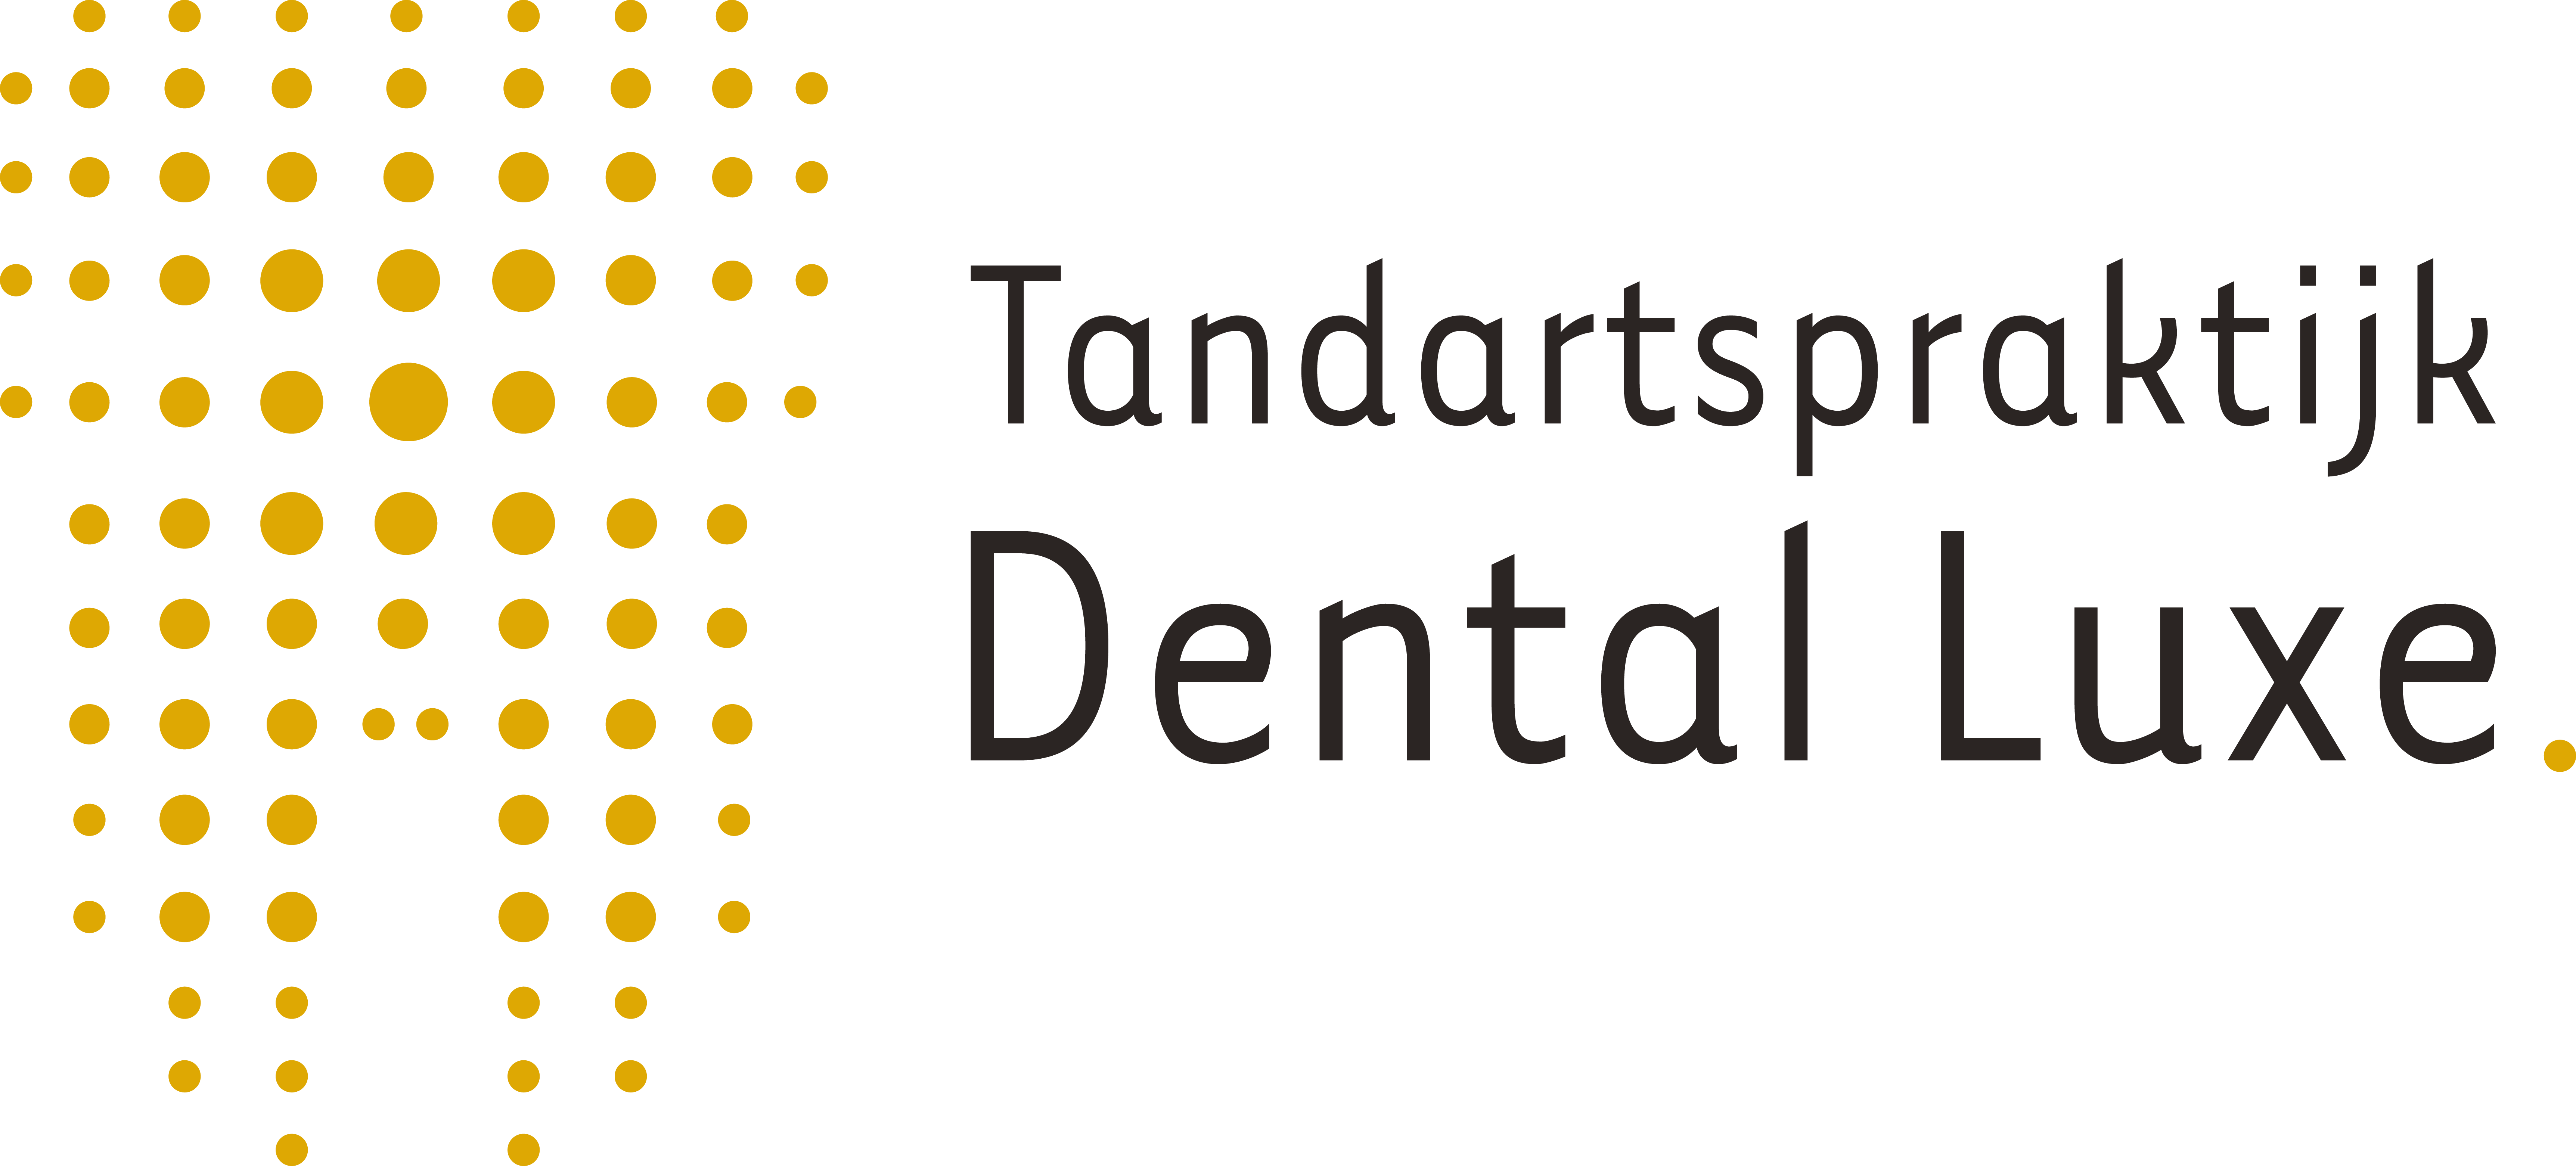 Tandartspraktijk Dental Luxe